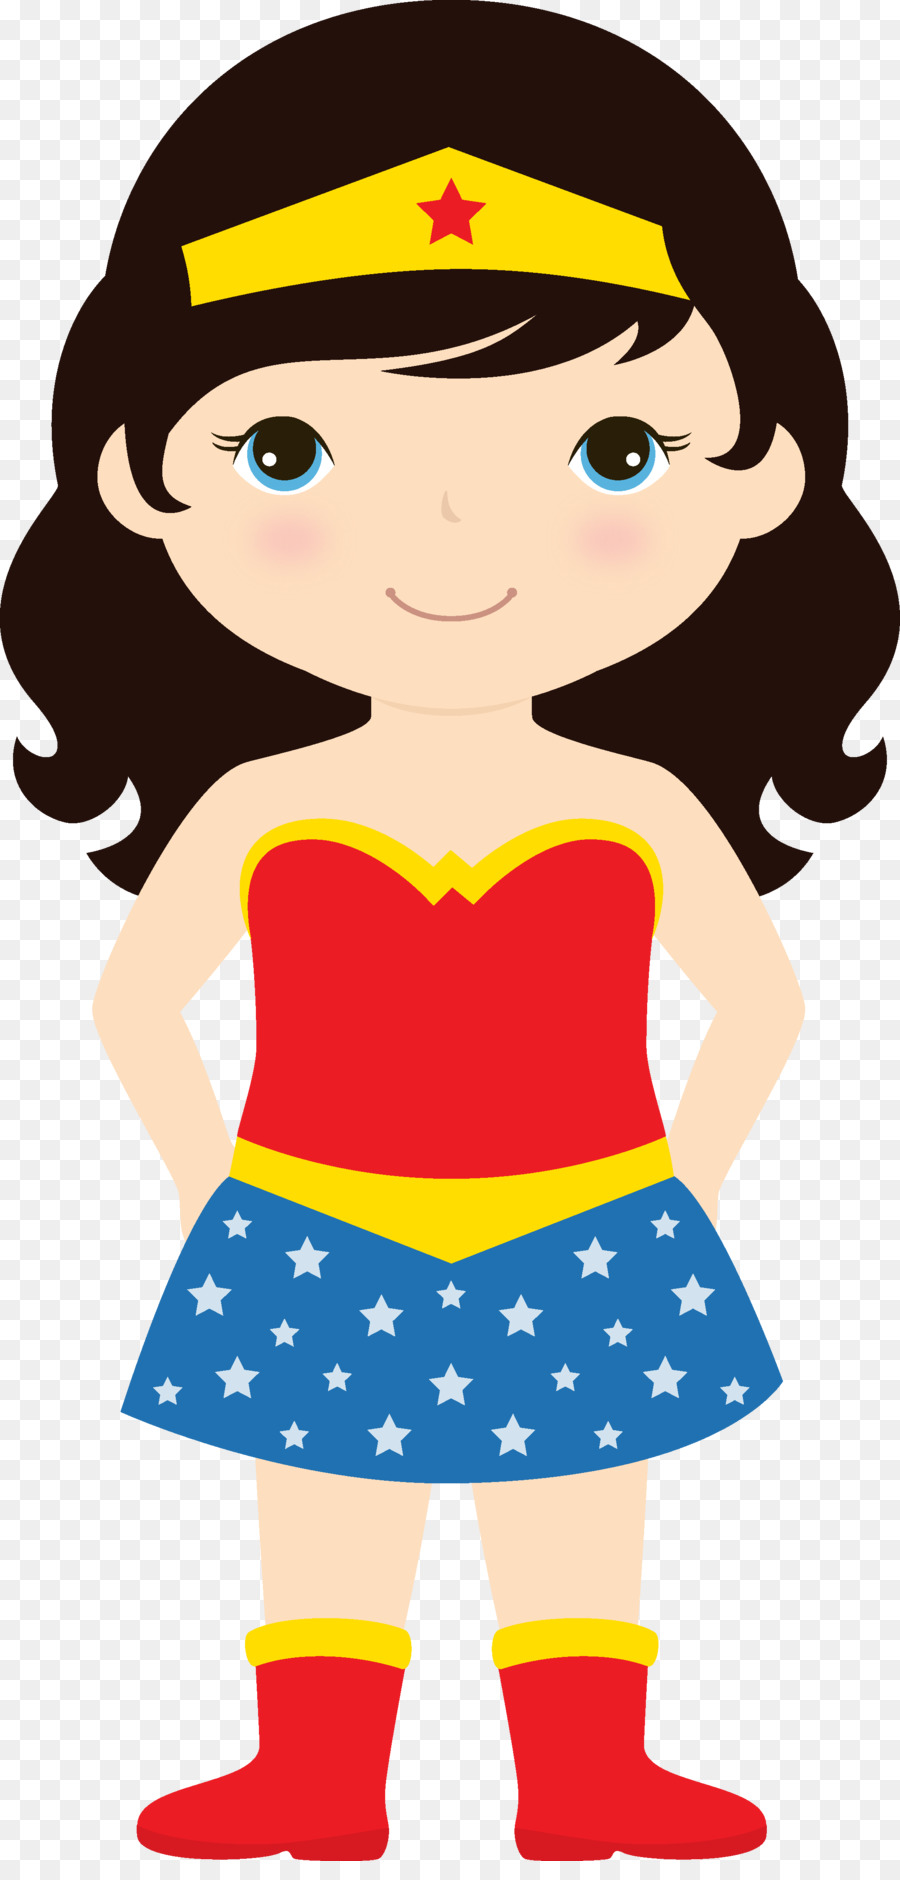 Wonder Woman Clip art Superhero Supergirl Image - holland lop png download - 2068*4277 - Free Transparent Wonder Woman png Download.